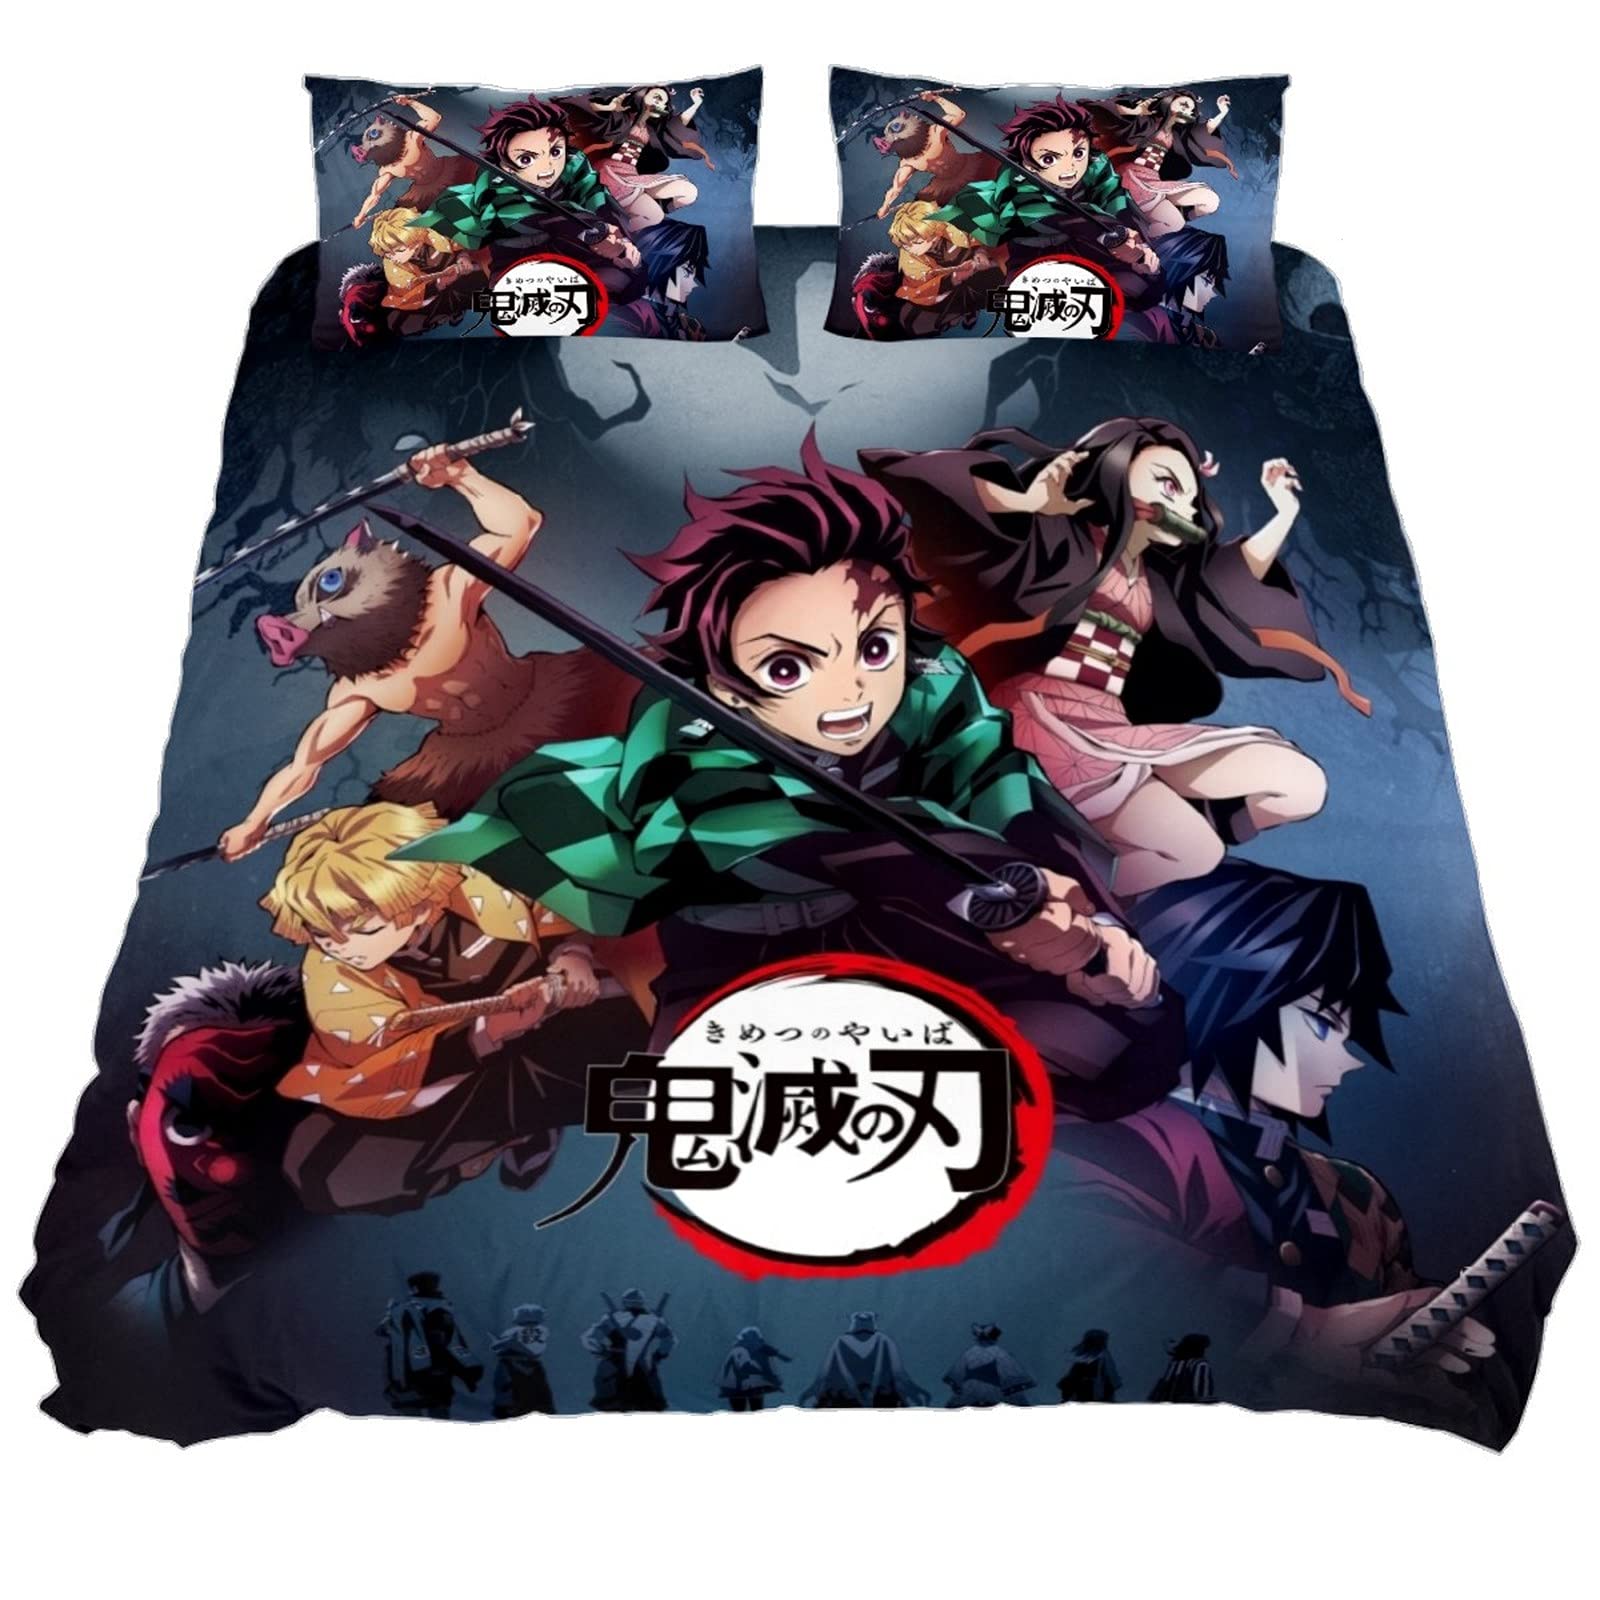 Mua Anime Demon Slayer Bedding Queen Size Japanese Kimetsu no Yaiba Bed Set  3pcs Bedroom Duvet Cover Set for Teens Boys Girls 1 Quilt Cover + 2  Pillowcases(No Comforter) trên Amazon Mỹ